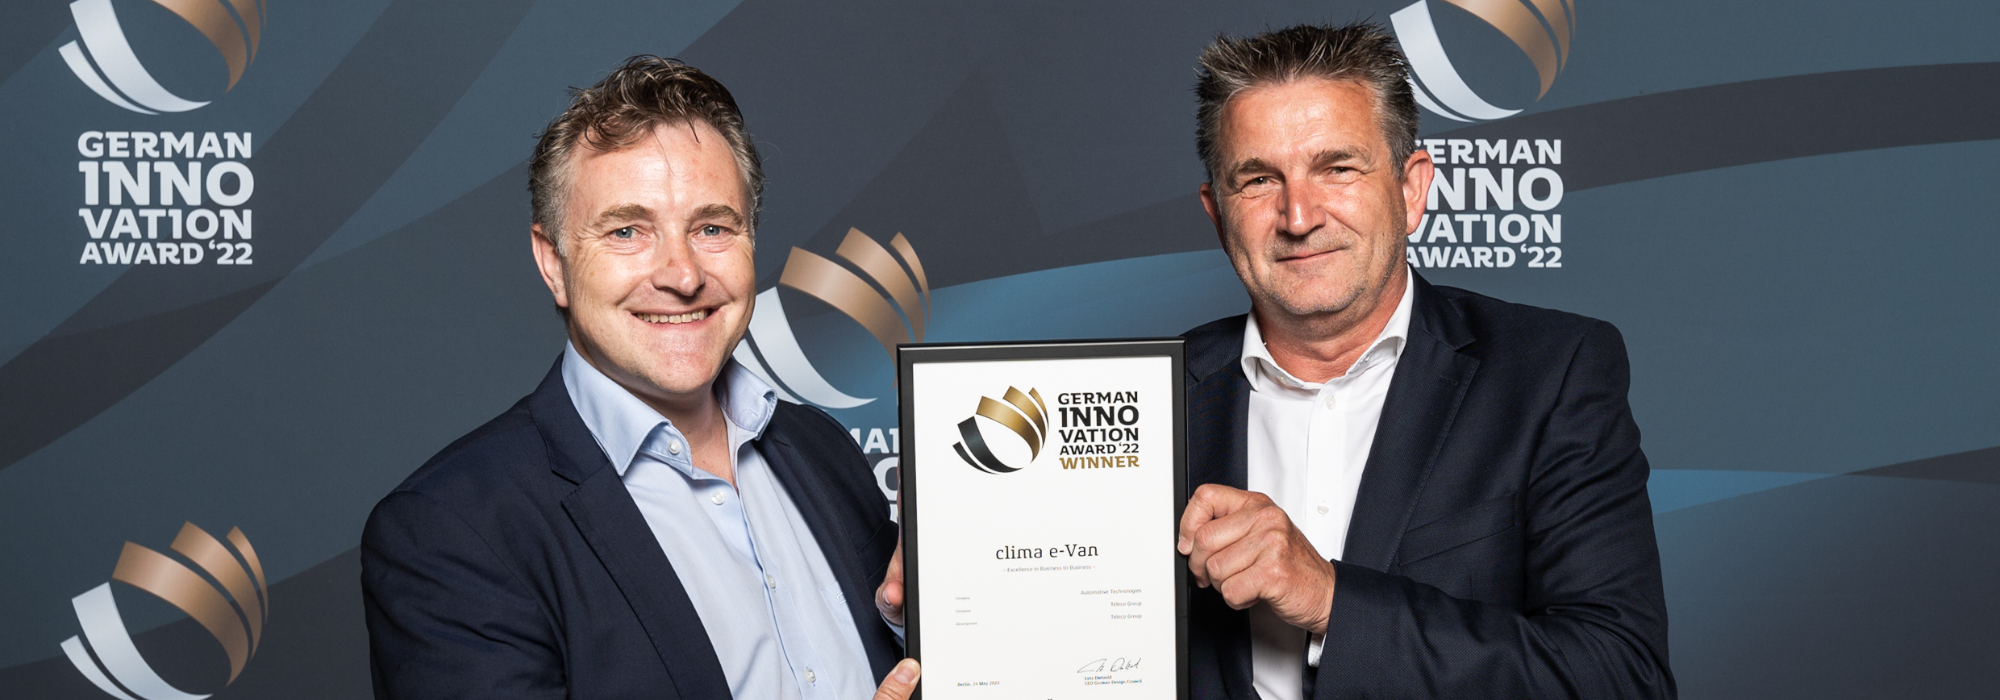 Teleco gagne le Prix de l’Innovation allemand